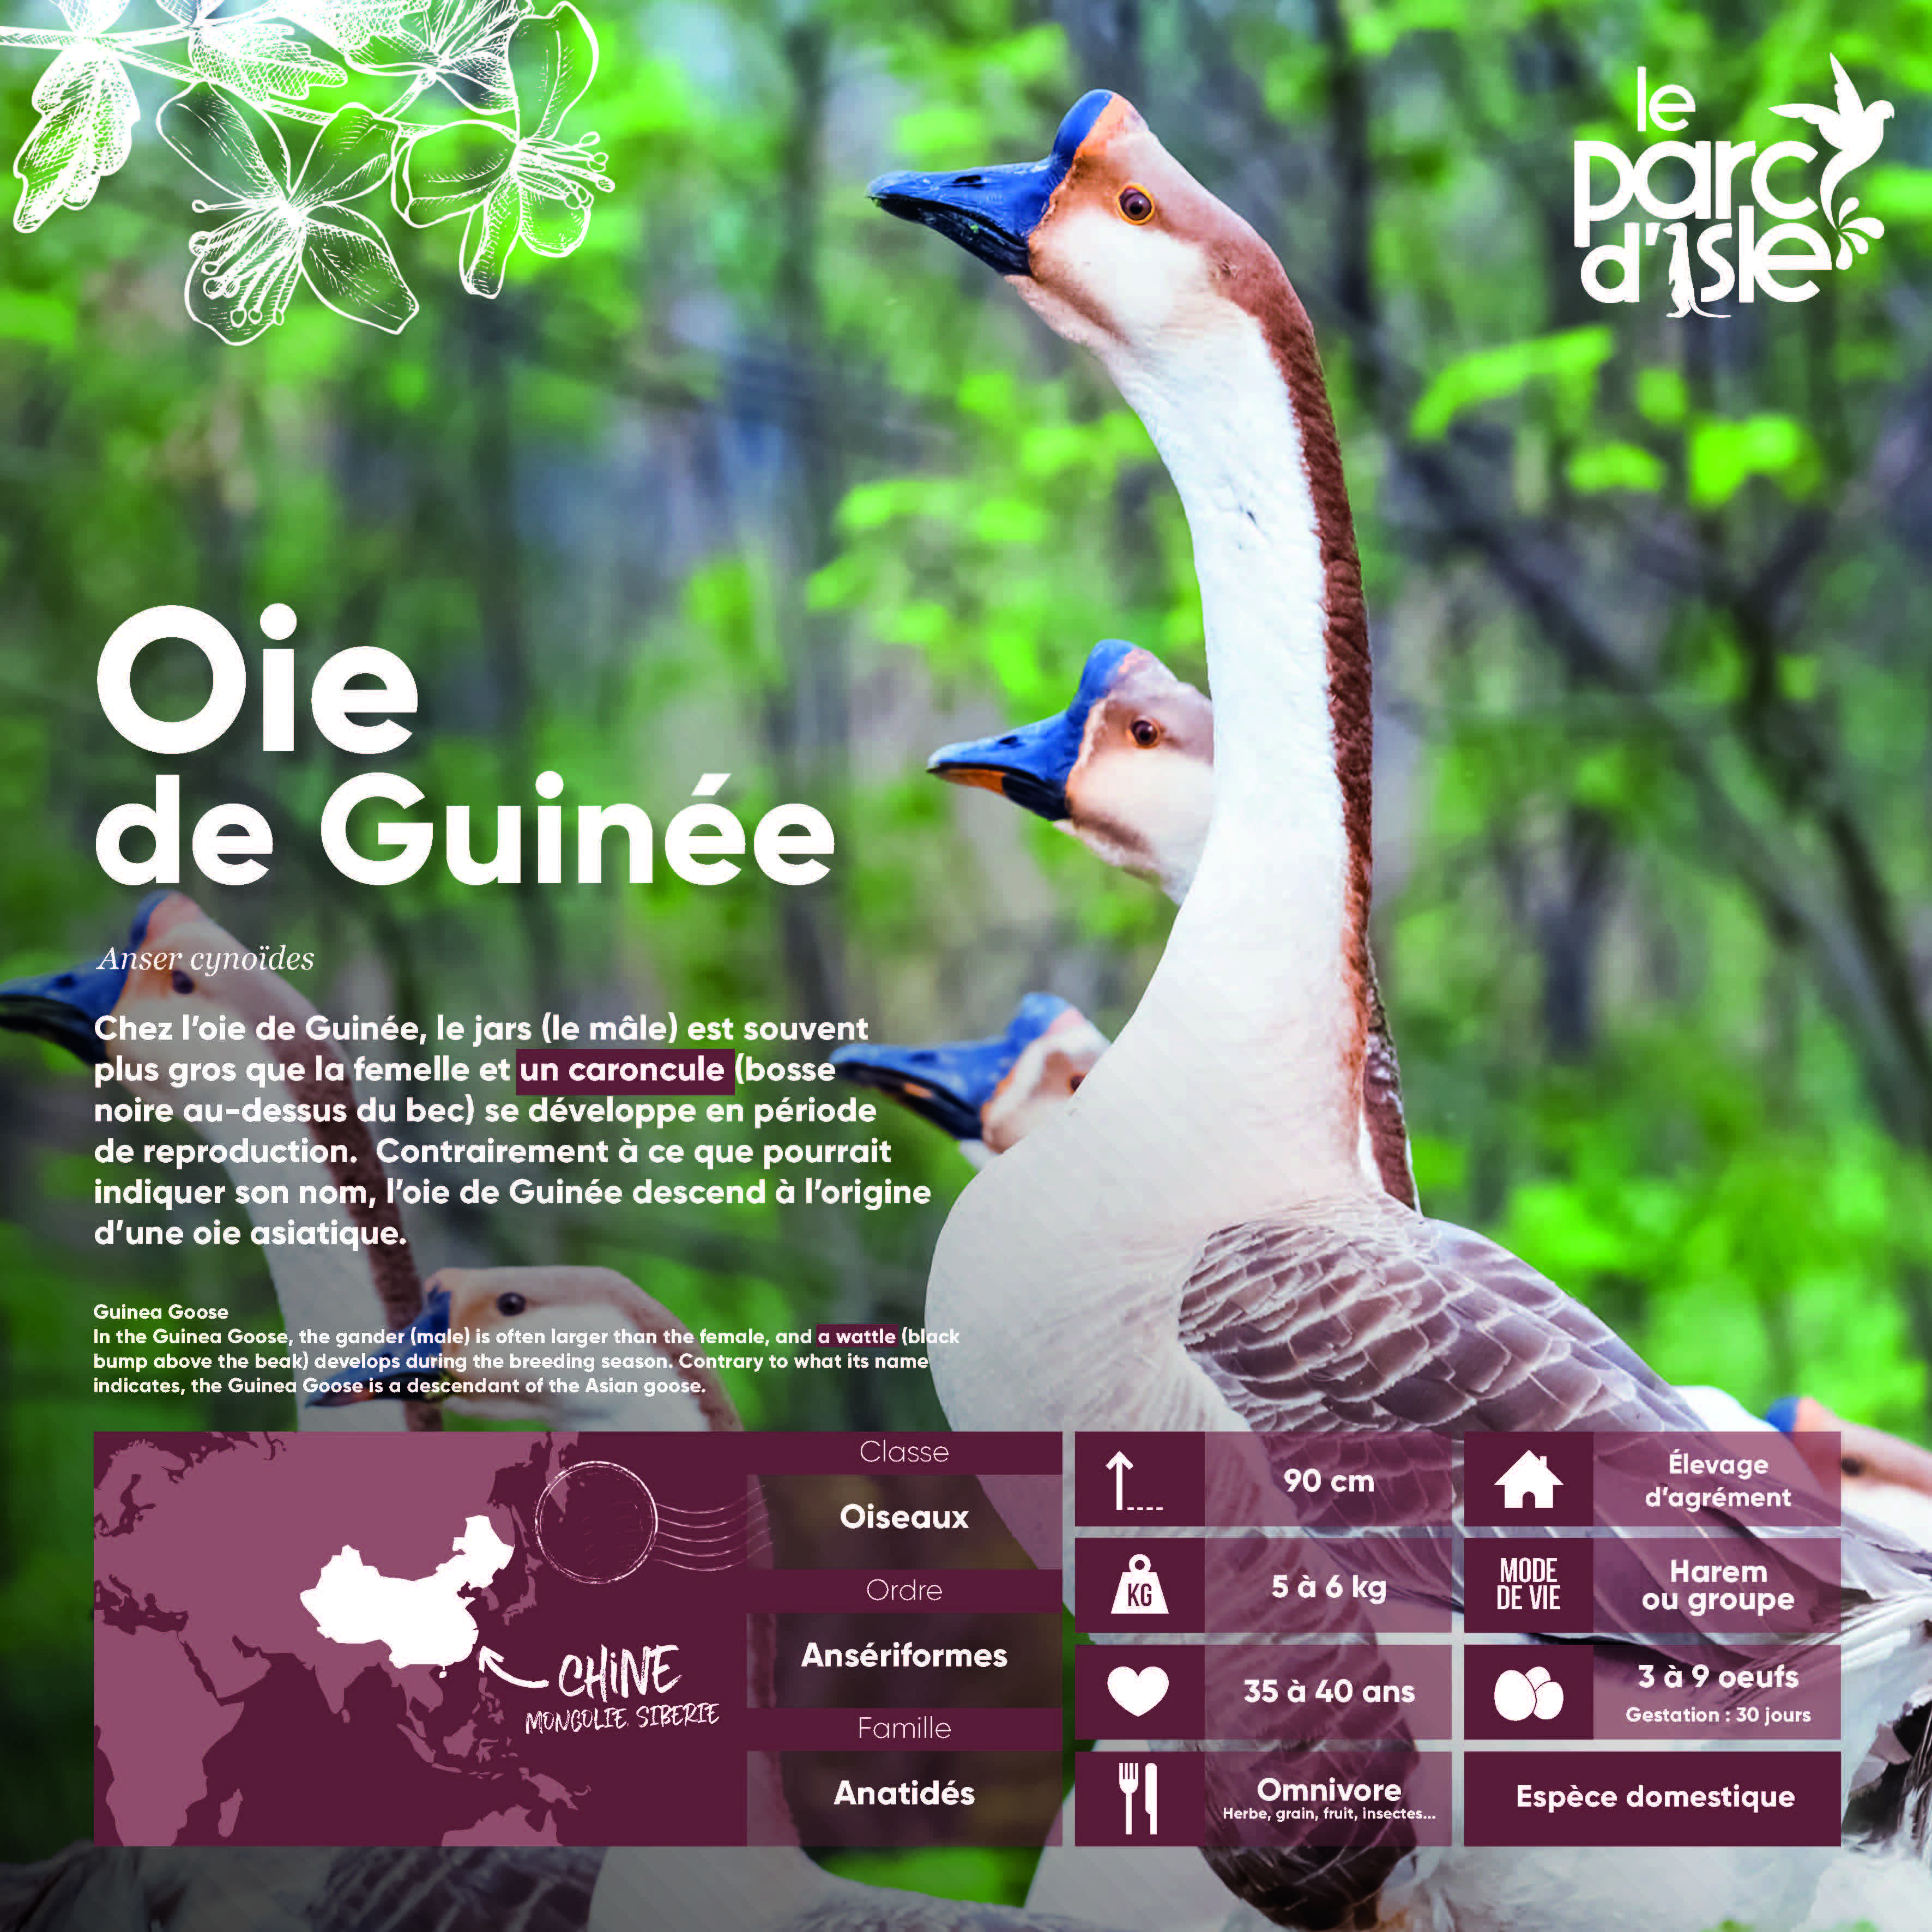 Oie de Guinée - Agrandir l'image, .JPG 880Ko (fenêtre modale)